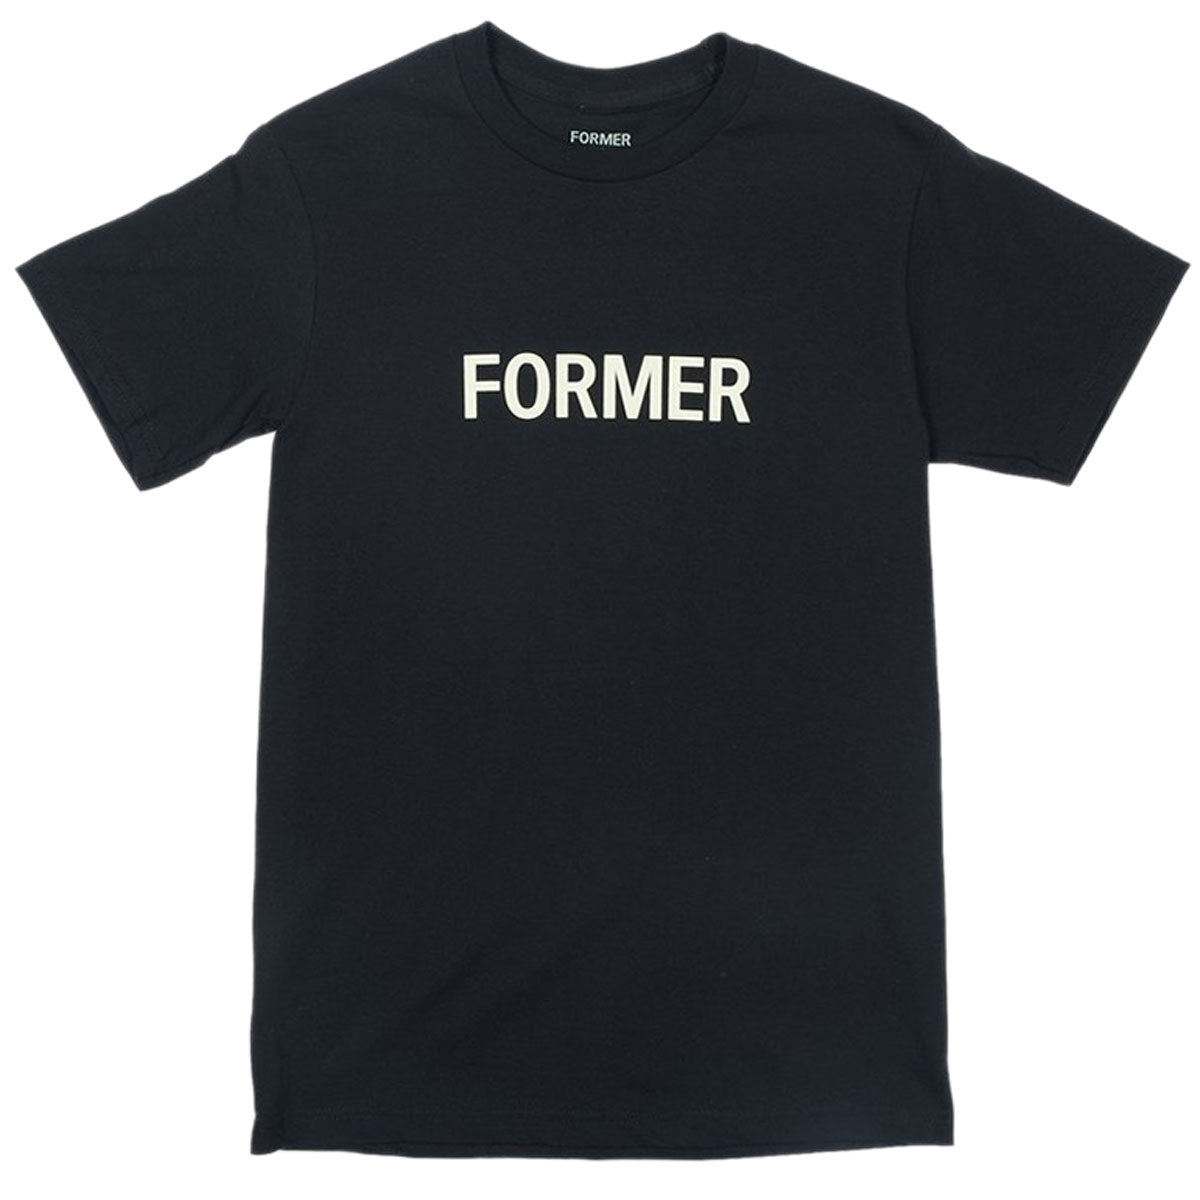 Former Legacy T-Shirt - Black image 1